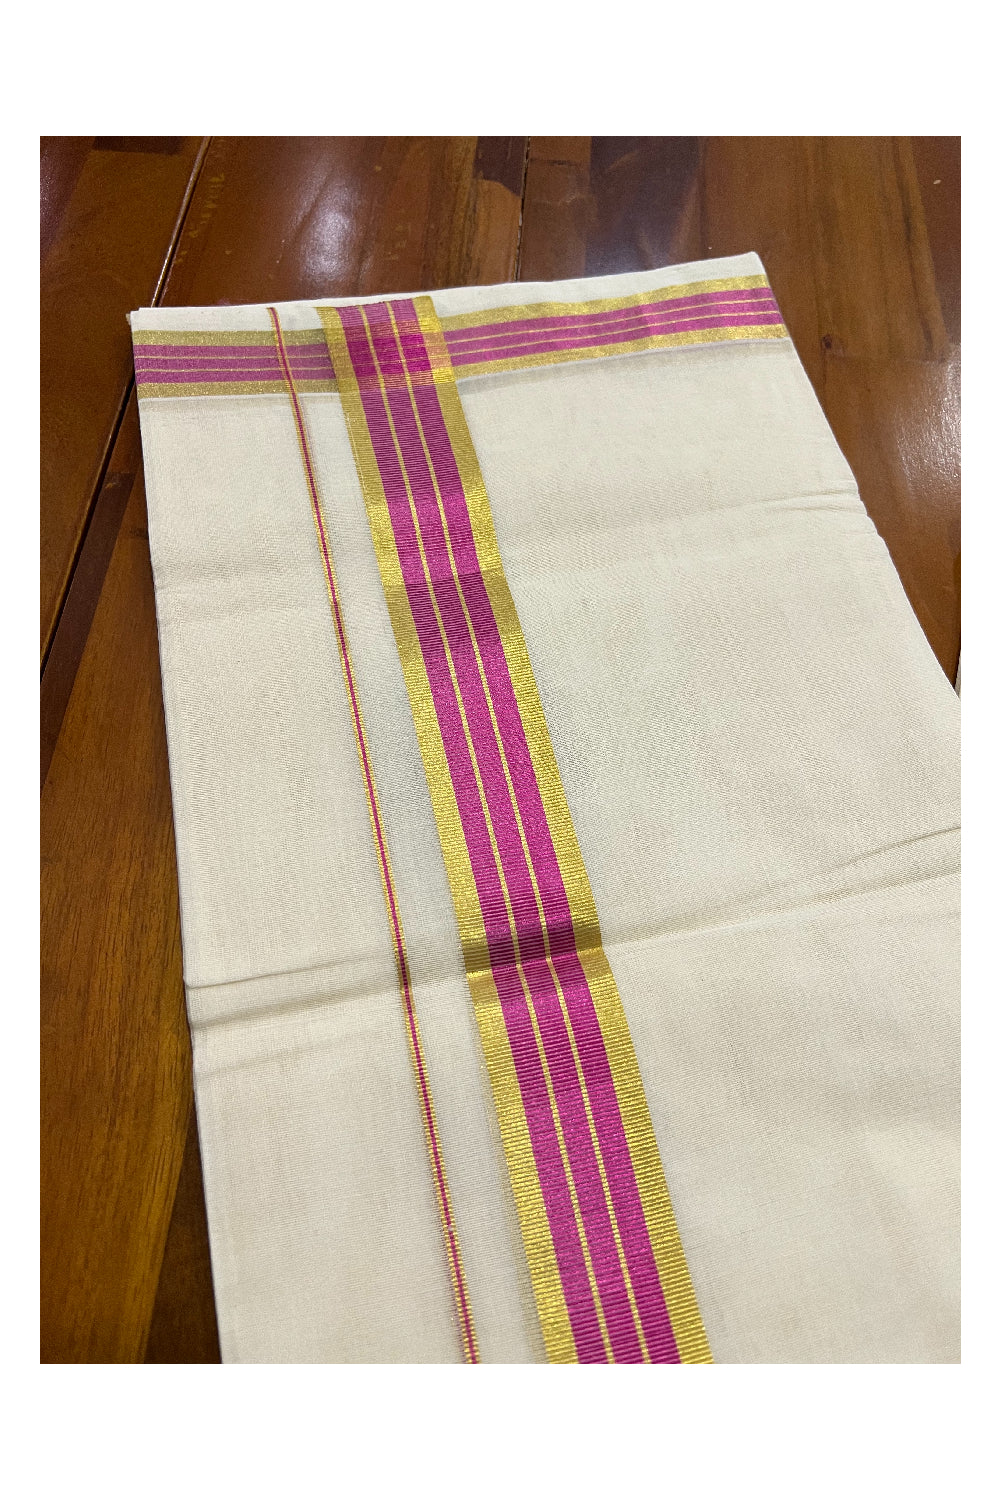 Southloom Balaramapuram Handloom Pure Cotton Mundu with Golden and Pink Kasavu Border (South Indian Dhoti)